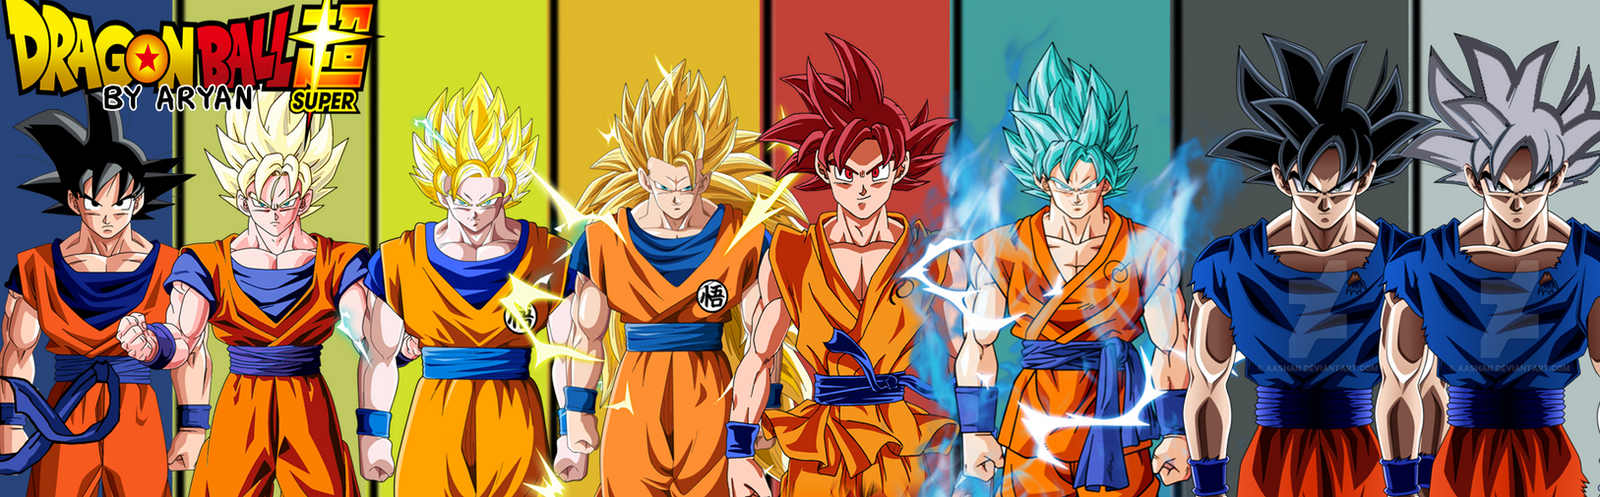 Goku All Super Saiyan Forms Poster/Wallpaper by ...